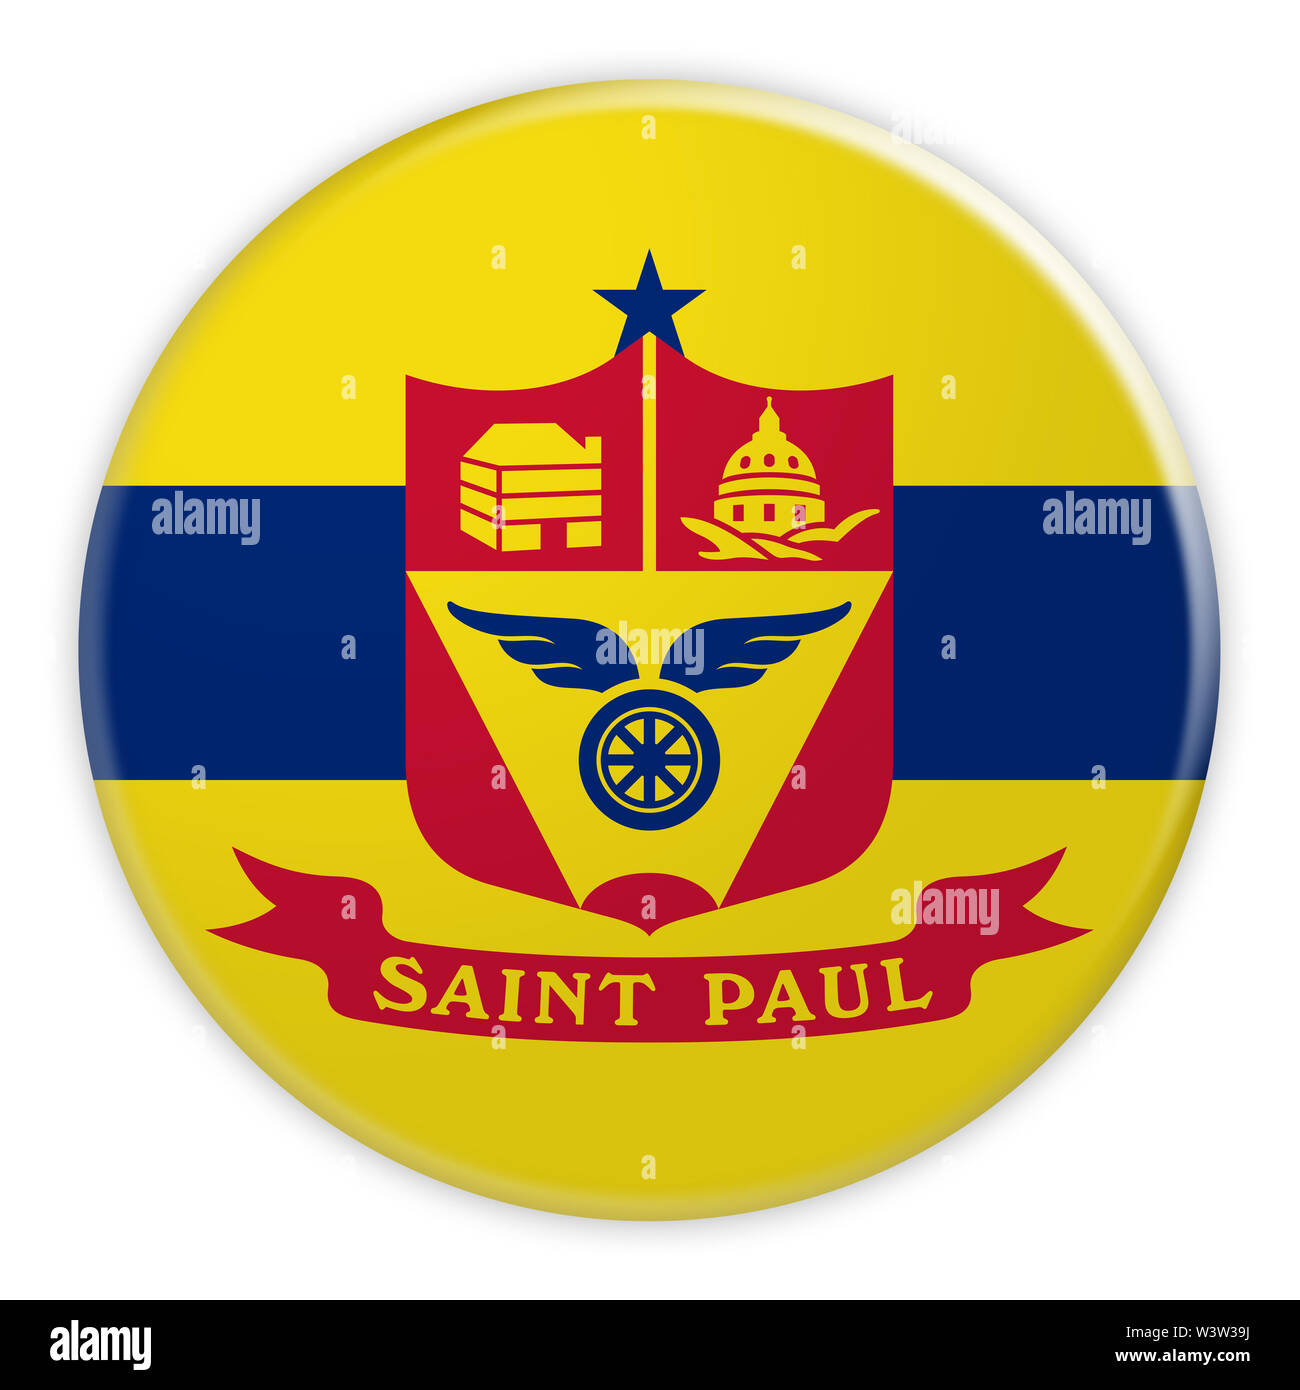 US City Button: Saint Paul, Minnesota Flag Badge, 3d illustration on white background Stock Photo